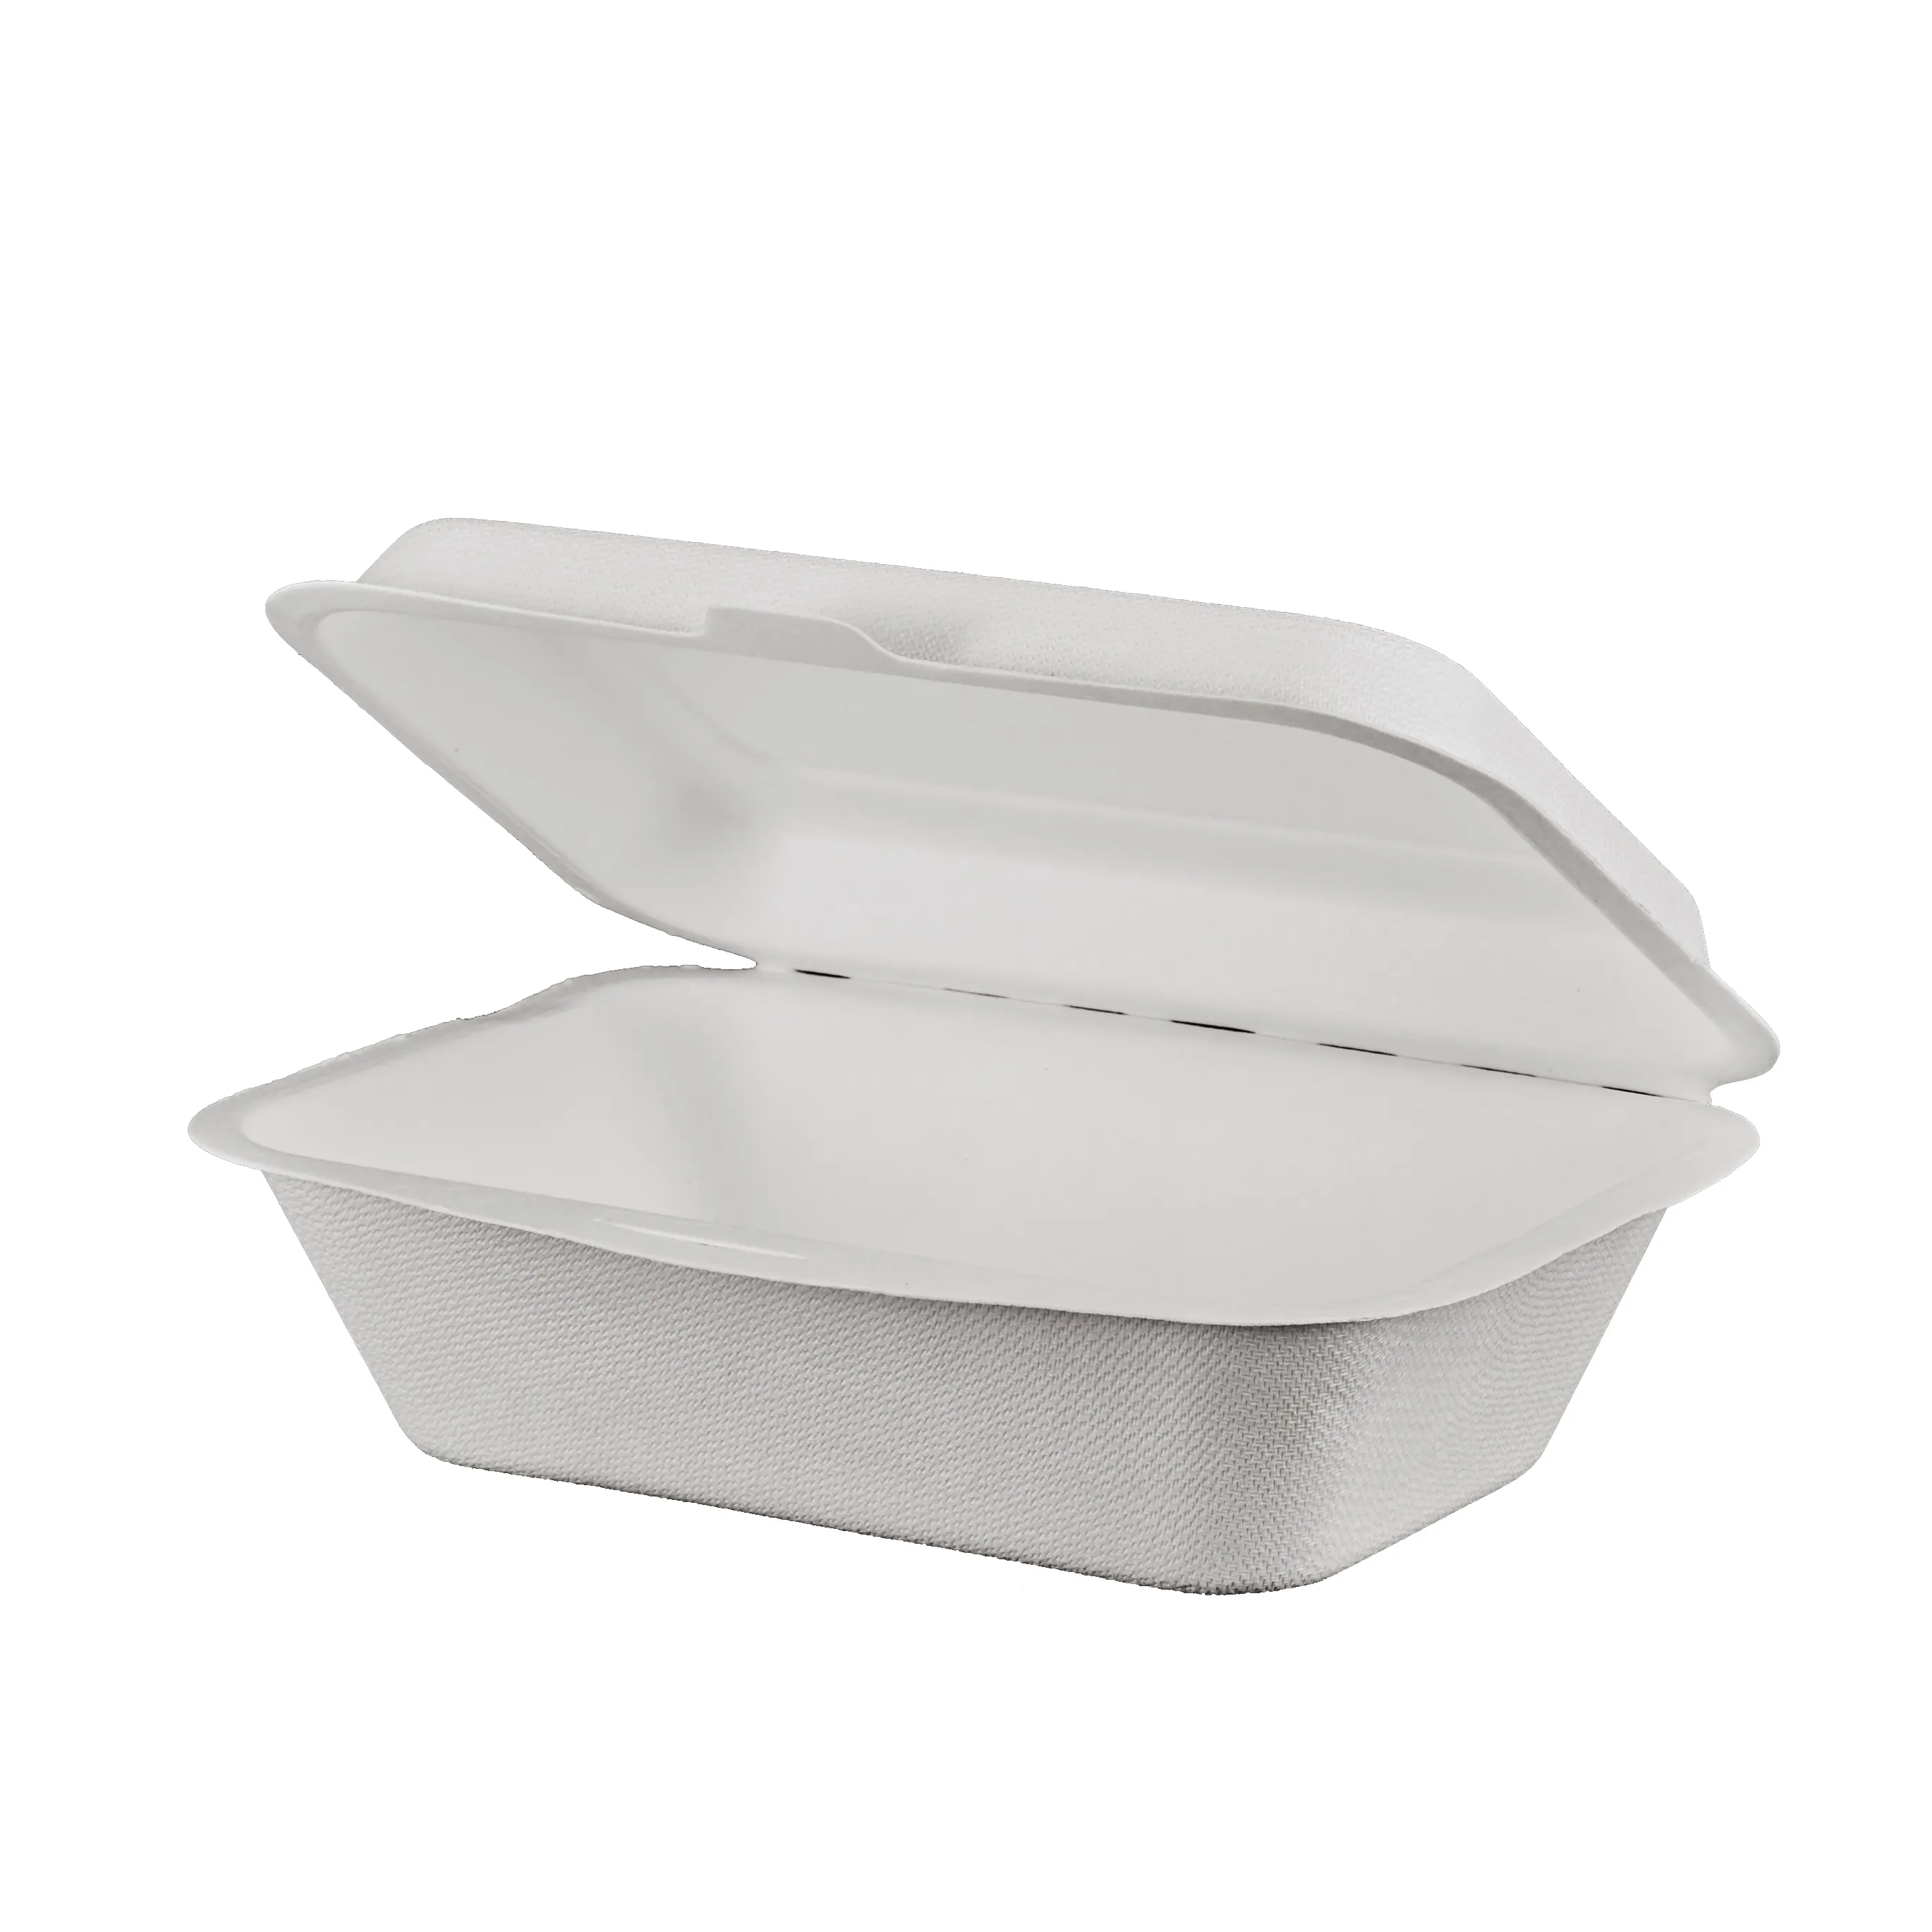 PFAS Envases Livres Biodegradável Descartável Take Away Microwavable Cana Bagaço Polpa Food Container Clamshell Lunch Box